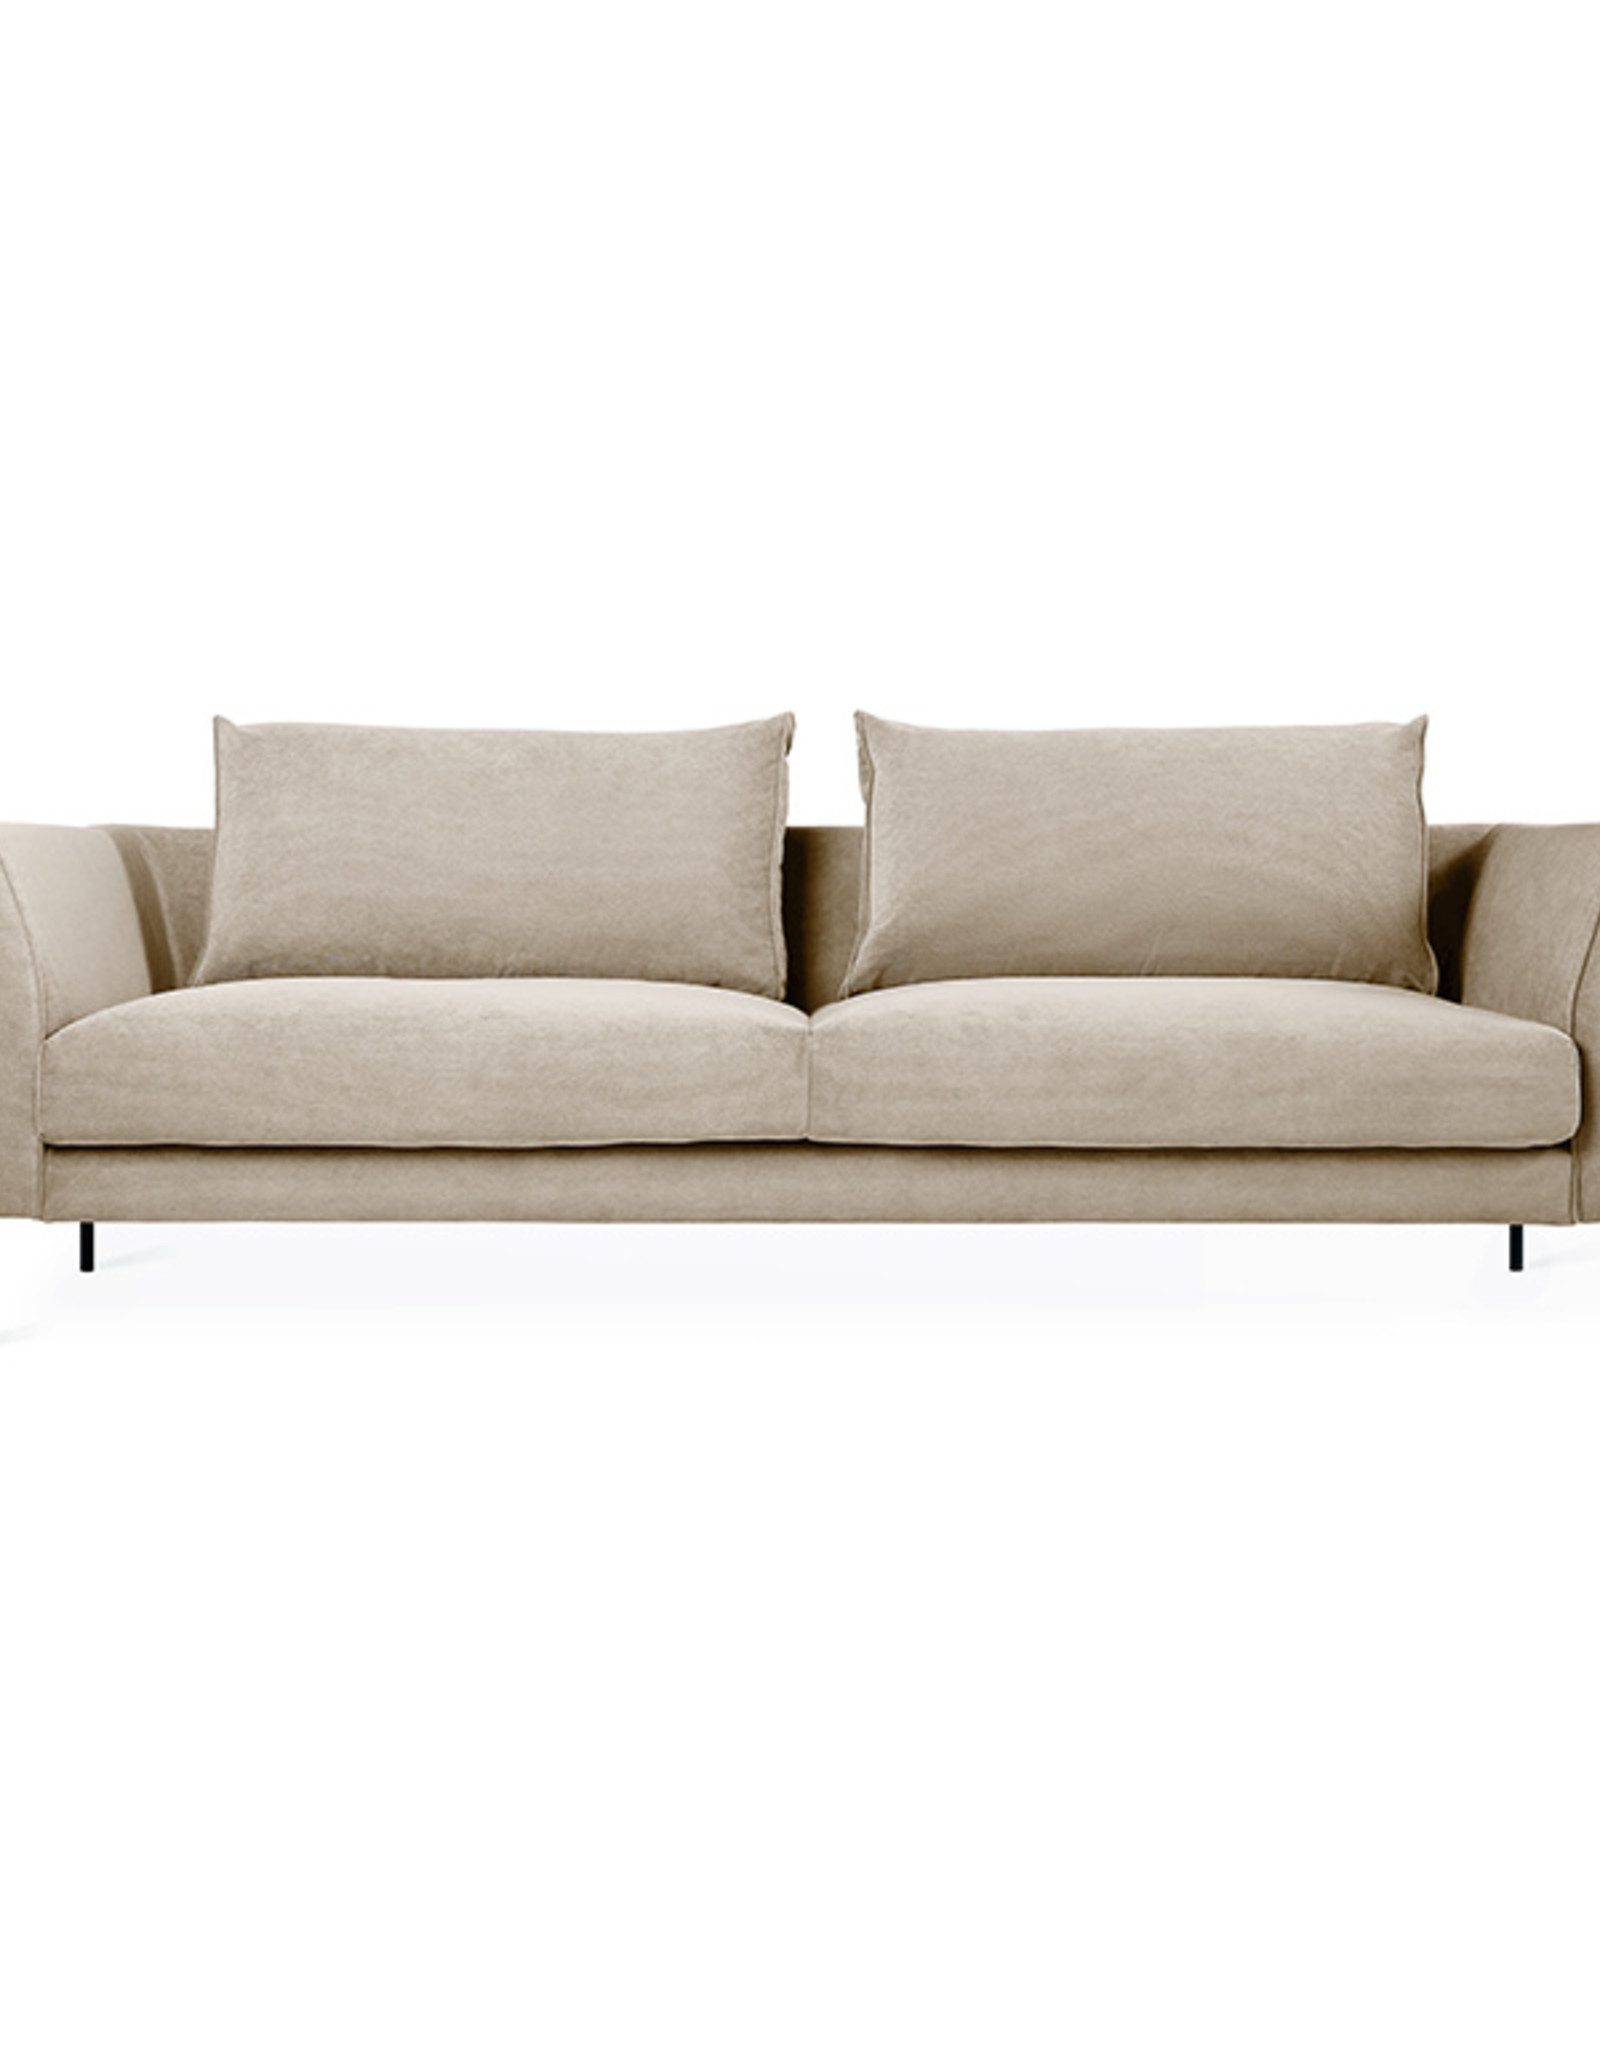 Gus* Modern Renfrew Sofa